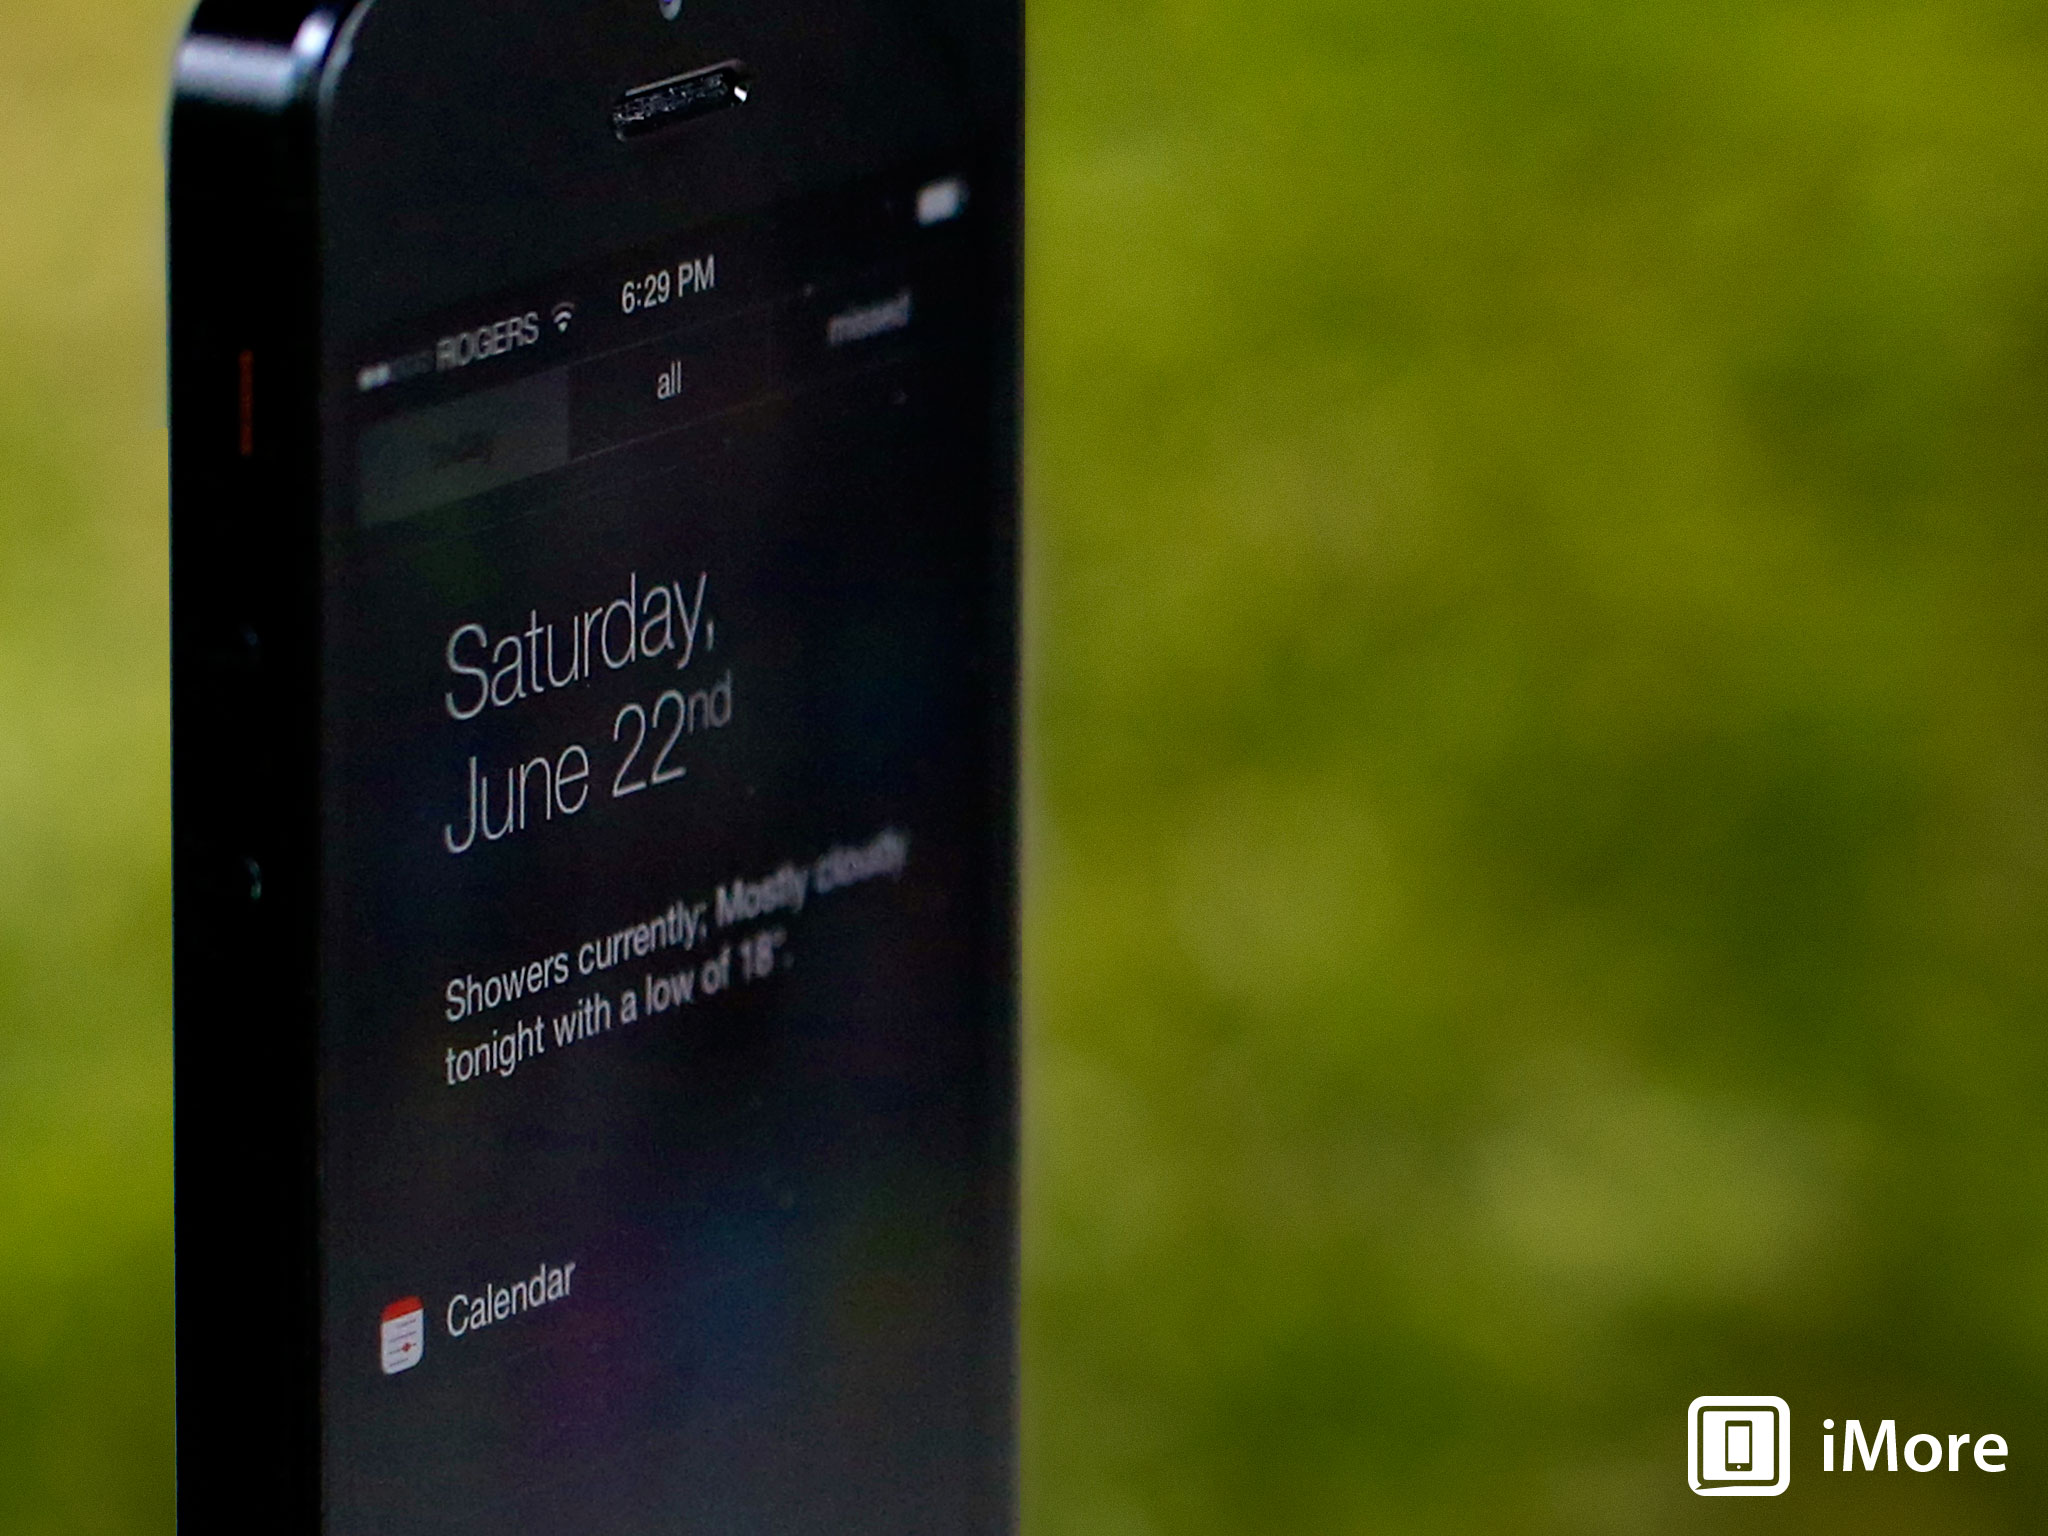 iOS 7 preview: Notification Center